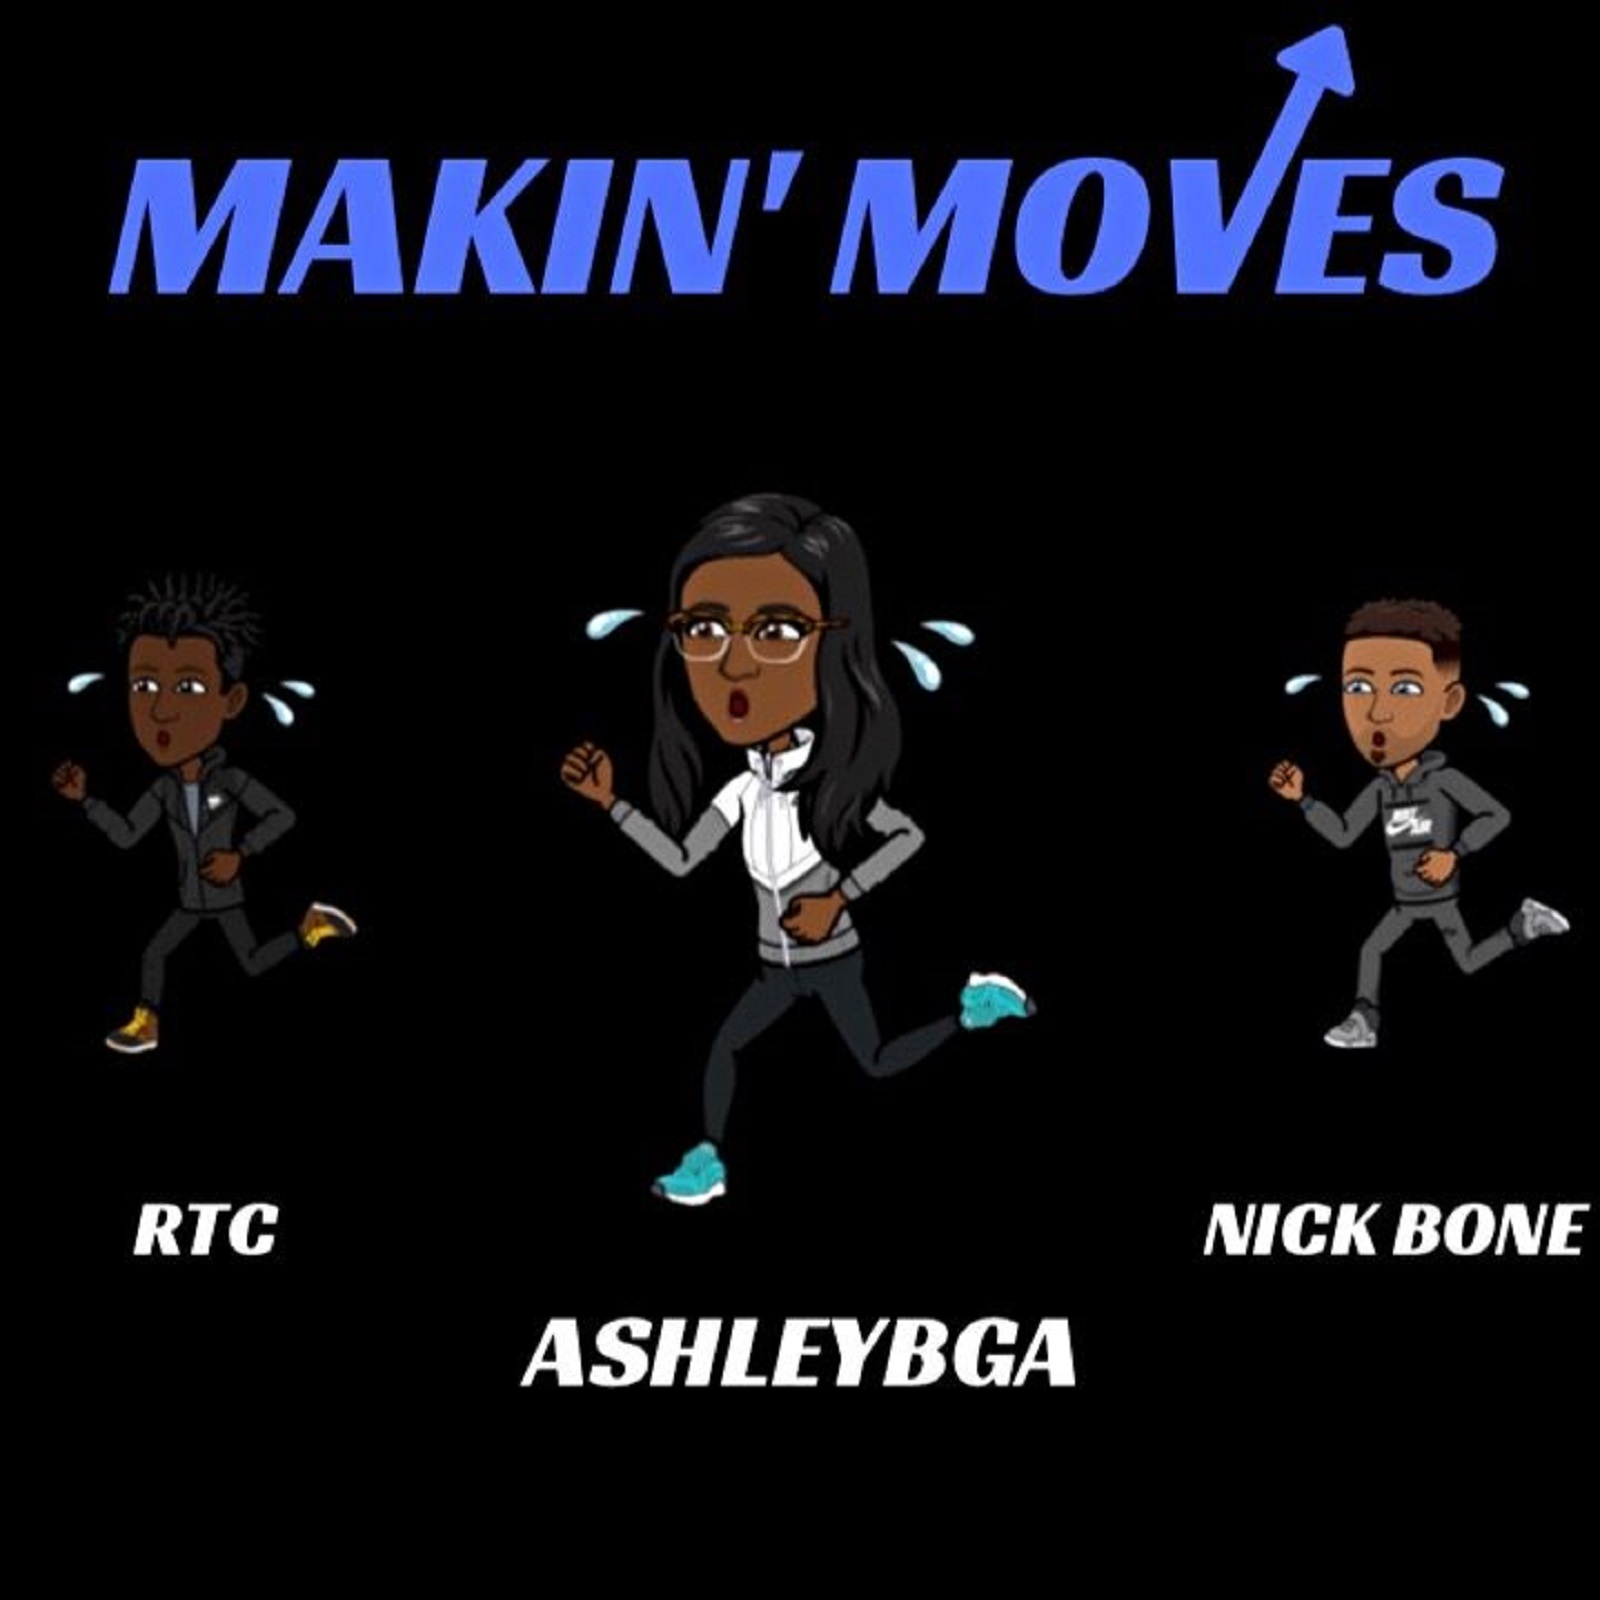 Makin' Moves by AshleyBGA feat. RTC & NickBone